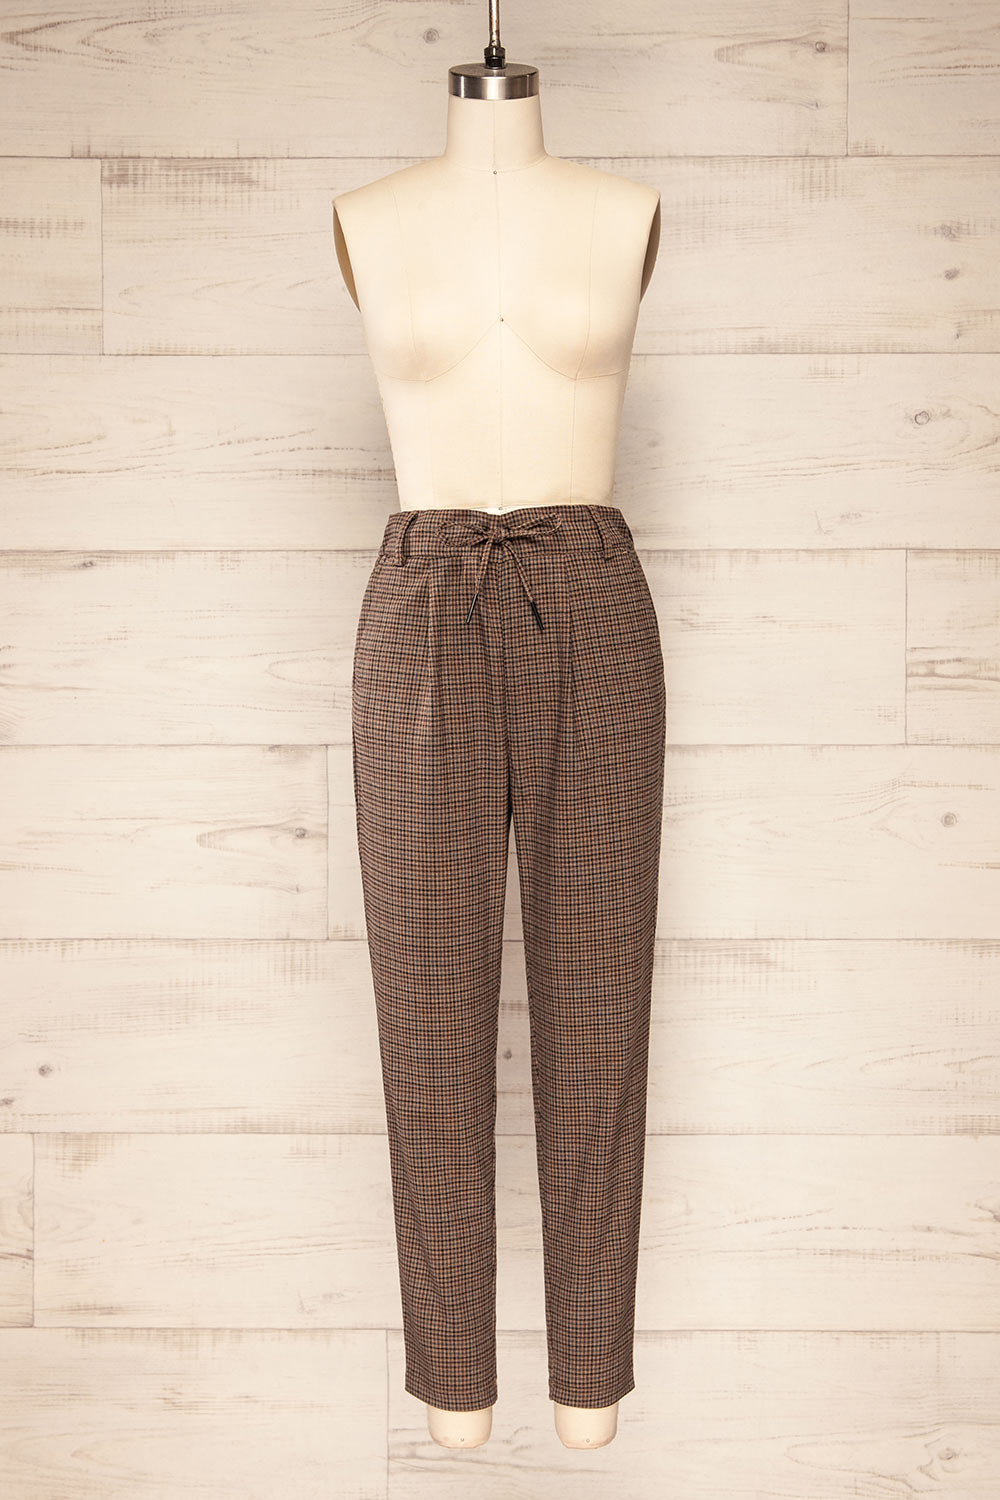 Hamilton Brown High-Waist Plaid Drawstring Pants